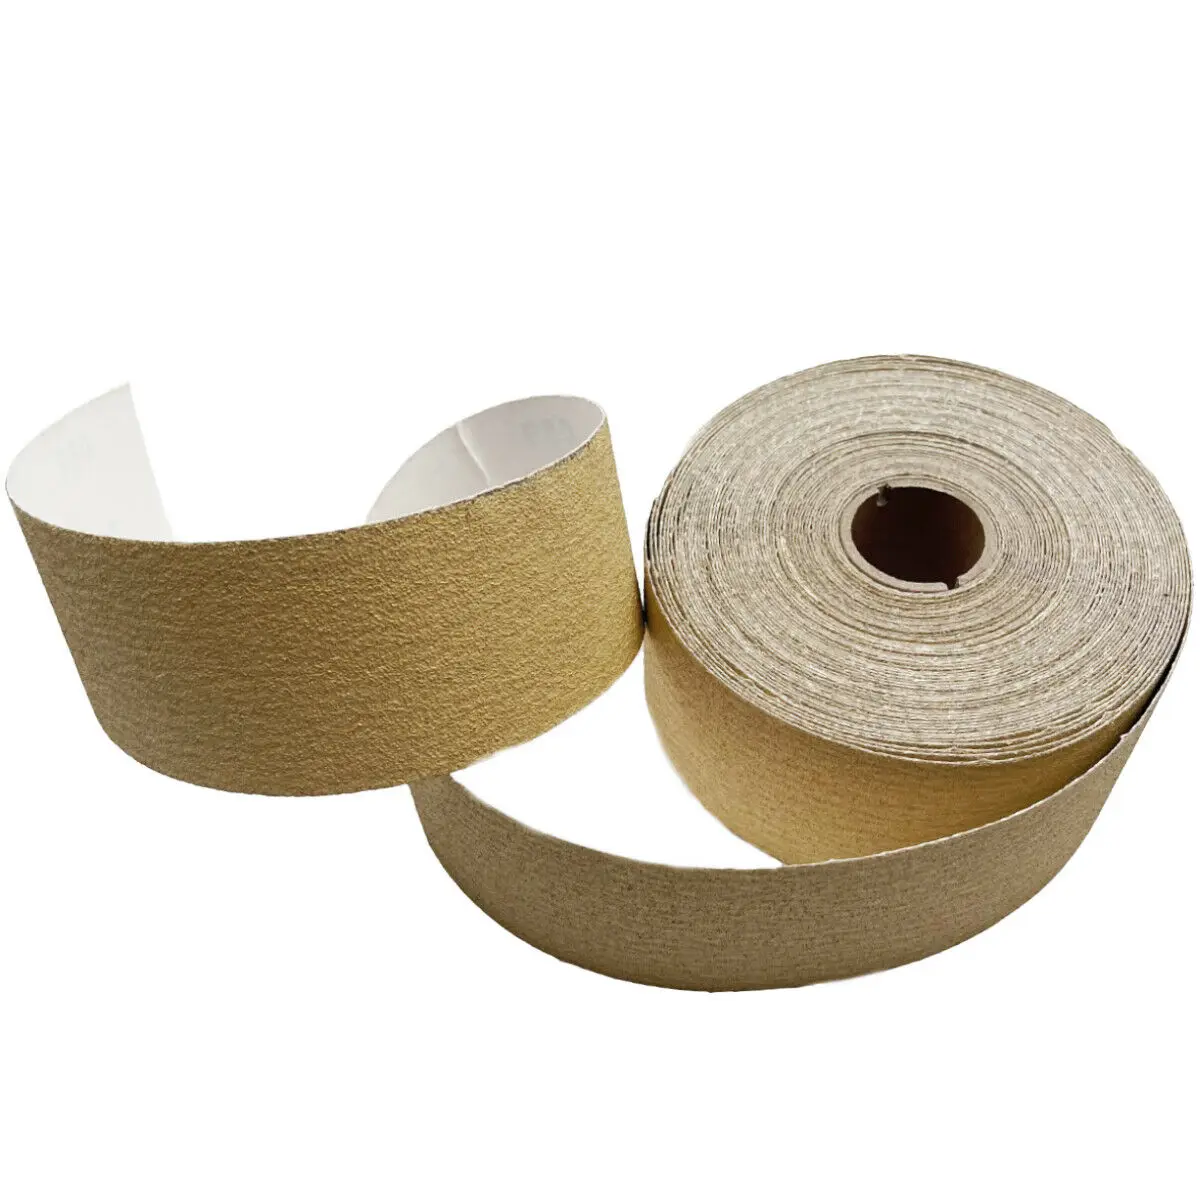 PSA 80 Grit Sandpaper Roll 2-3/4In x 20 Yards Longboard Self Adhesive Sandpaper